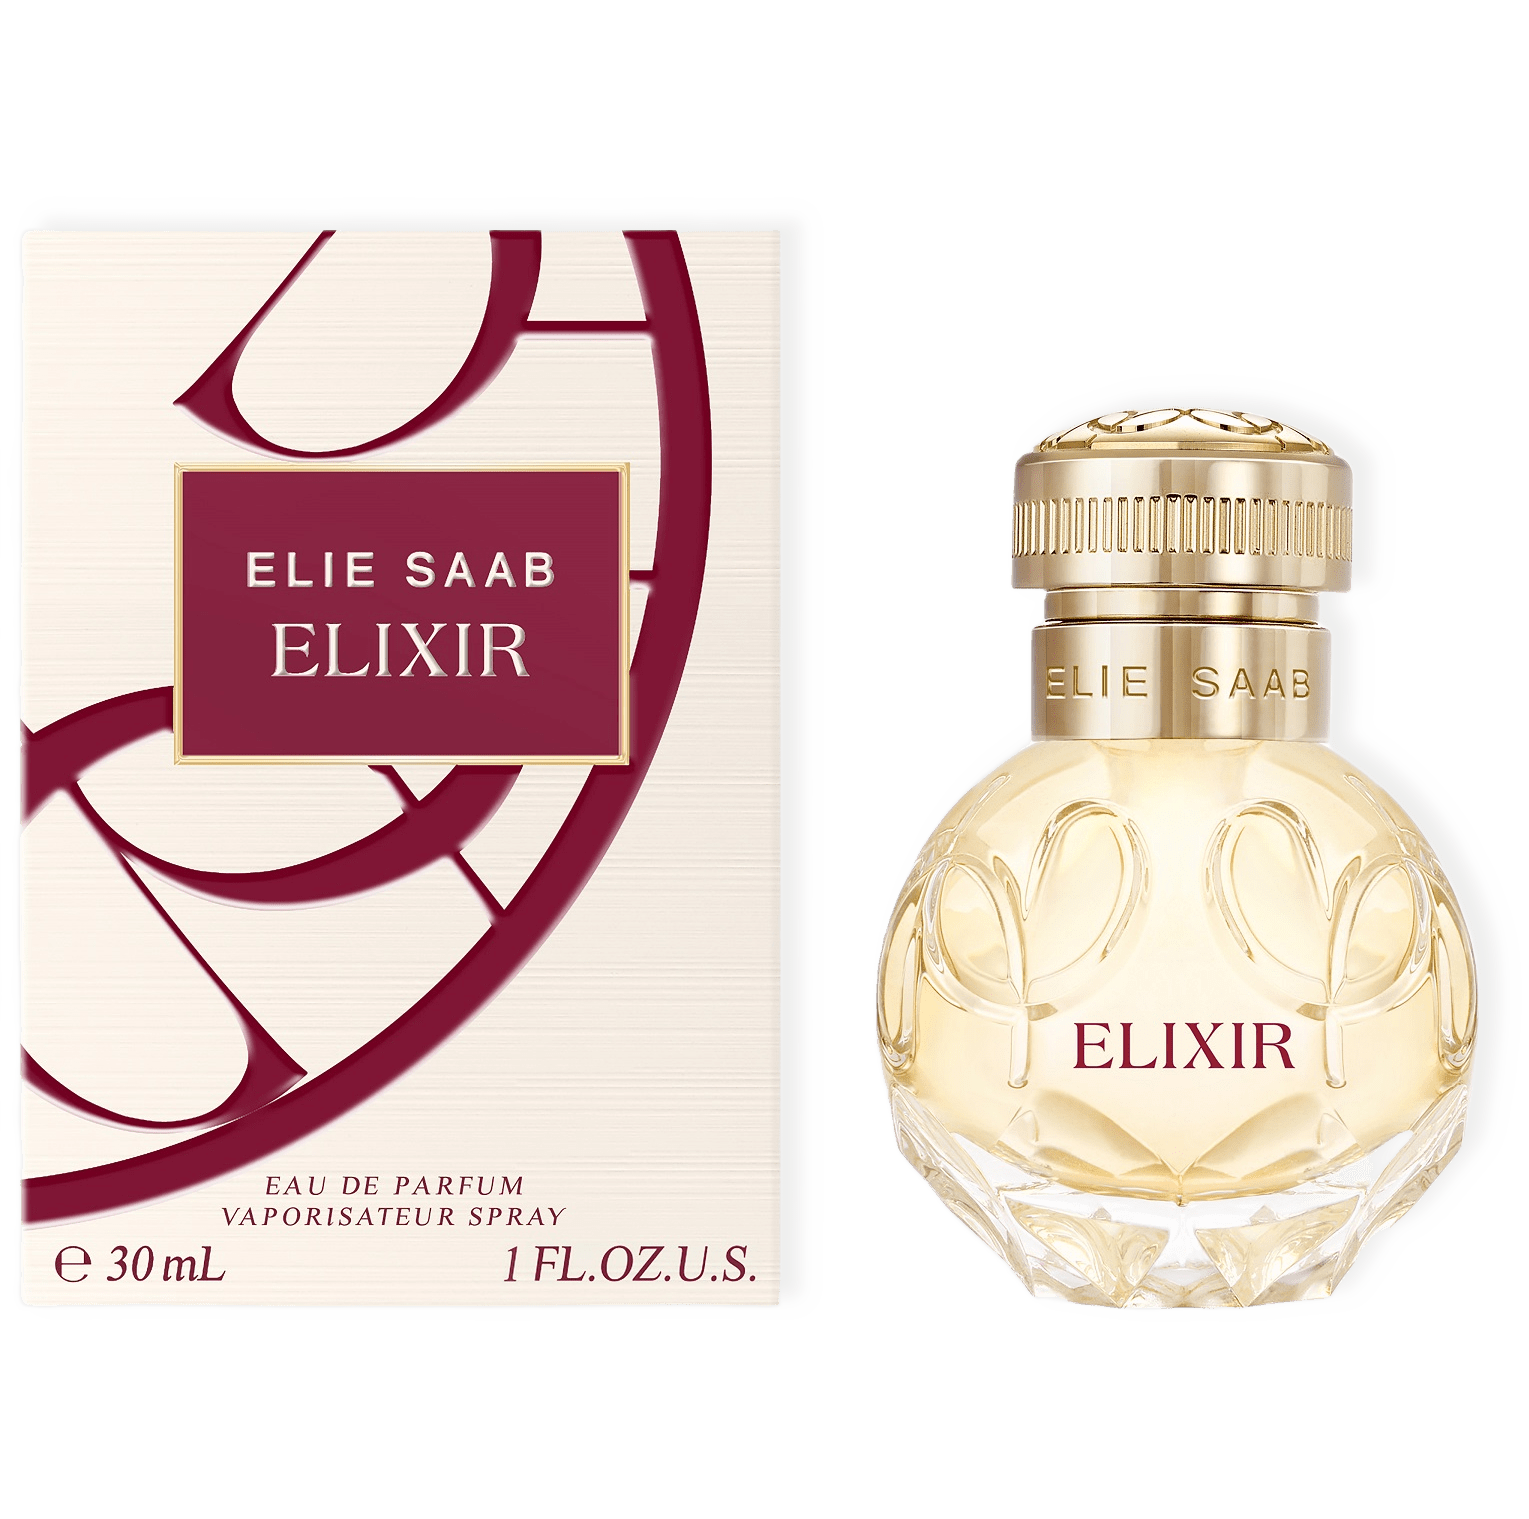 Elixir Eau de Parfum från Elie Saab